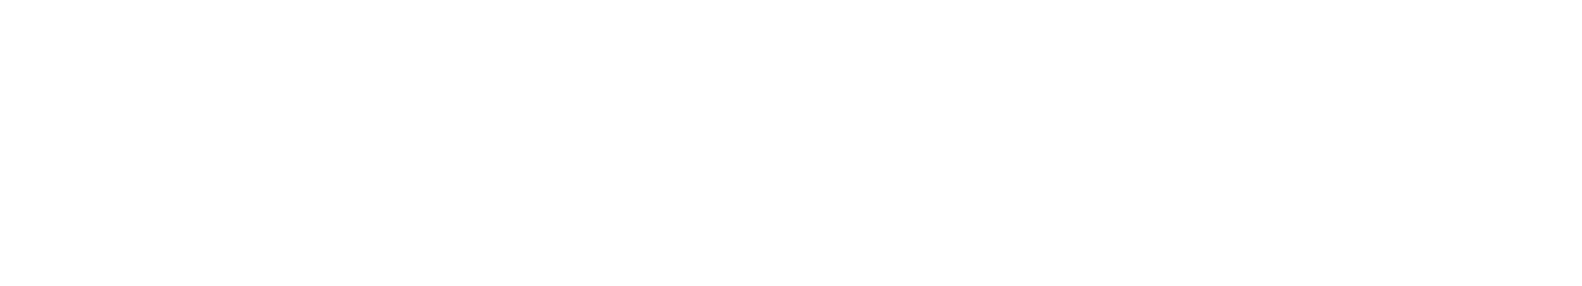 Century Communities
 logo large for dark backgrounds (transparent PNG)